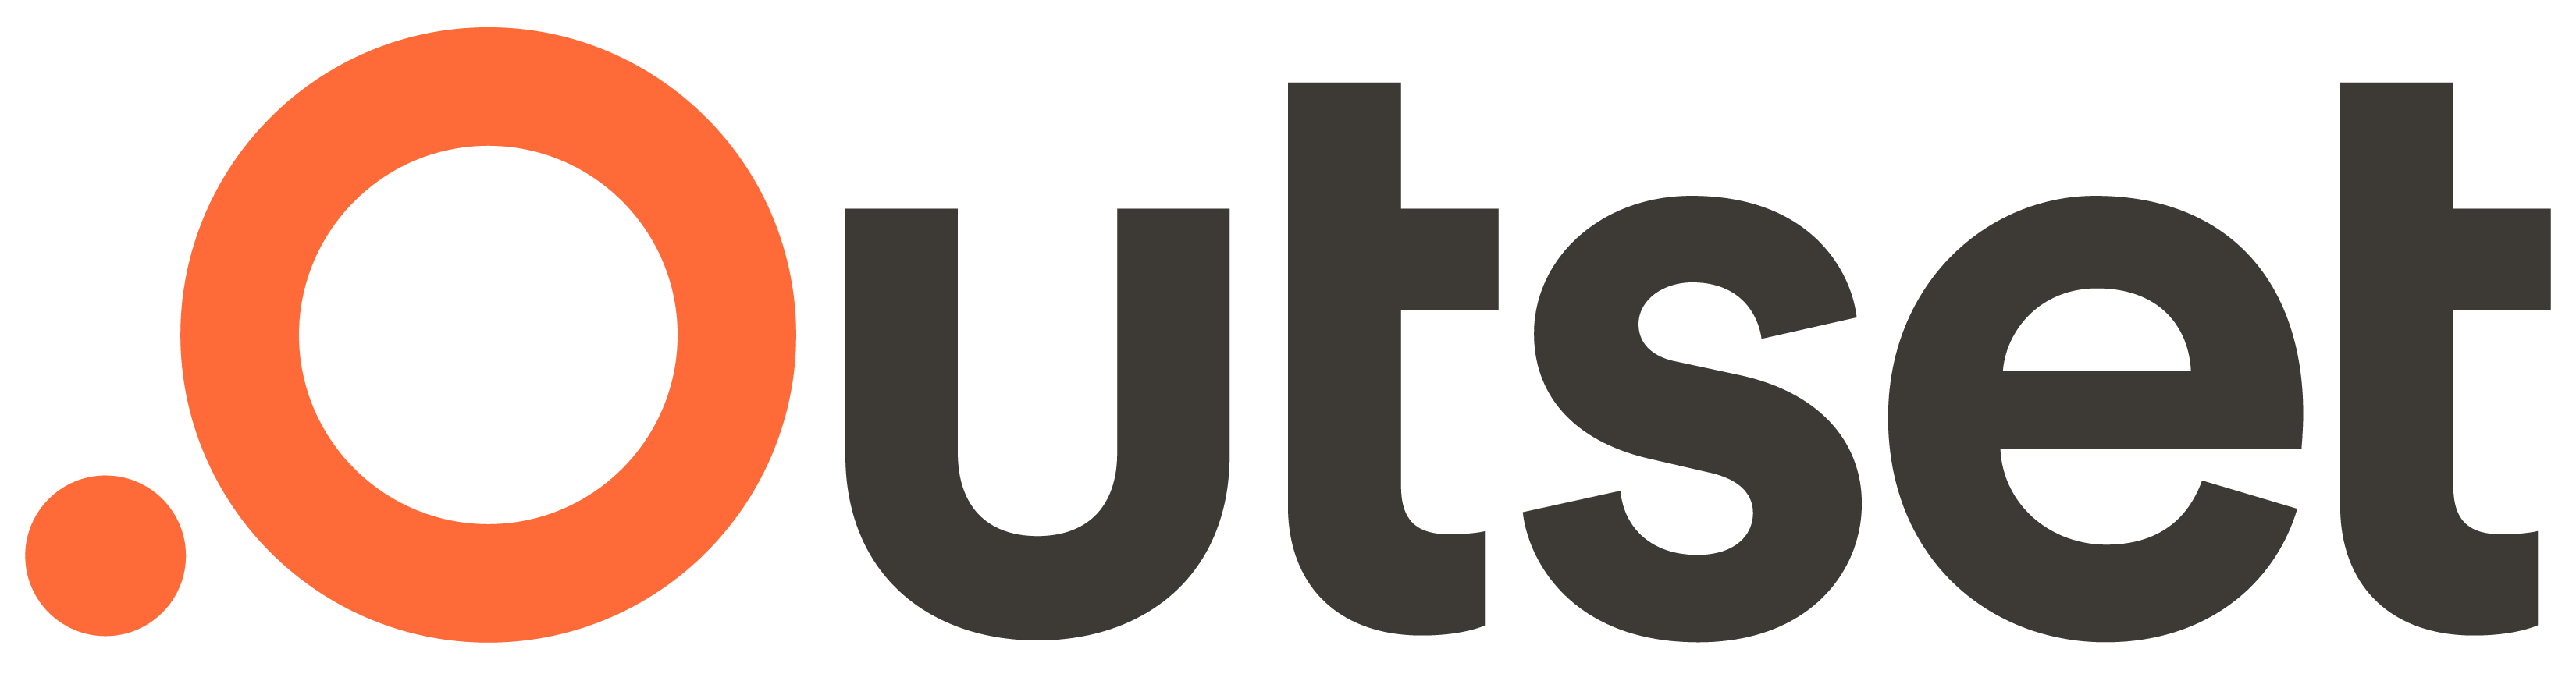 Outset Medical logo